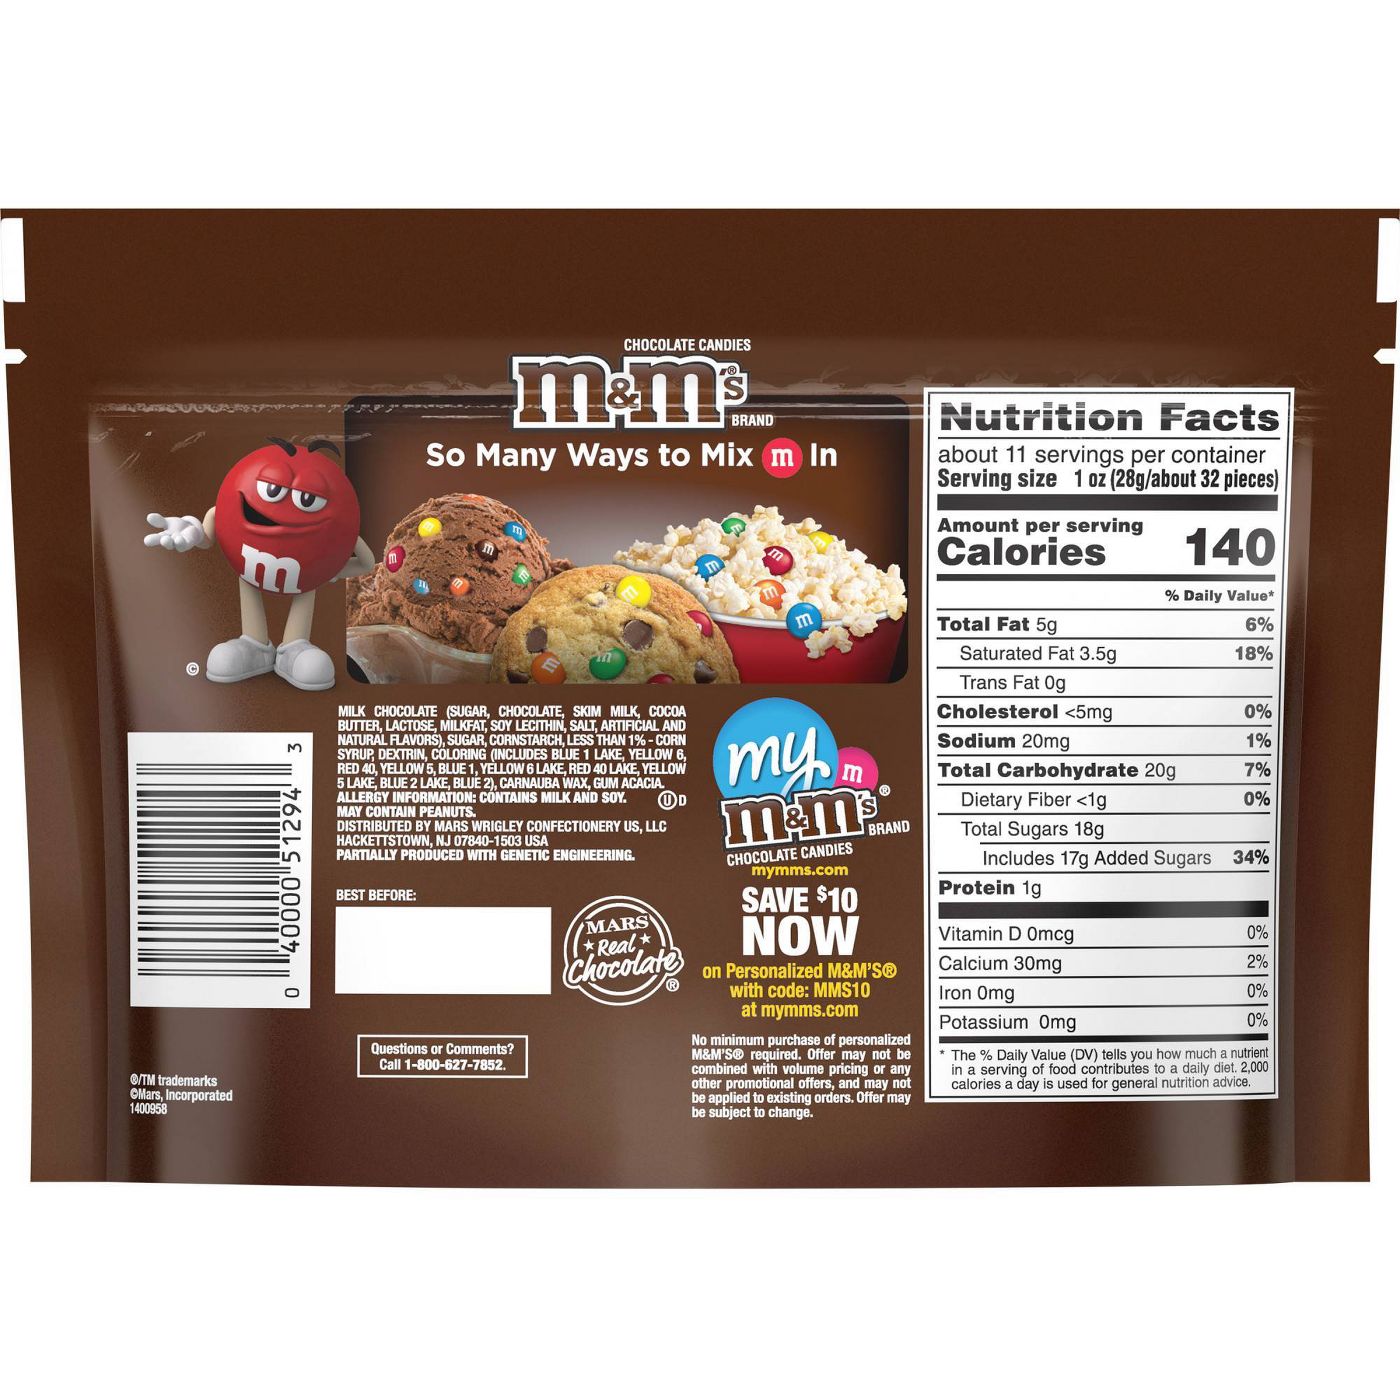 M&M's Milk Chocolate Candy Sharing Size - 10.7 oz Bag